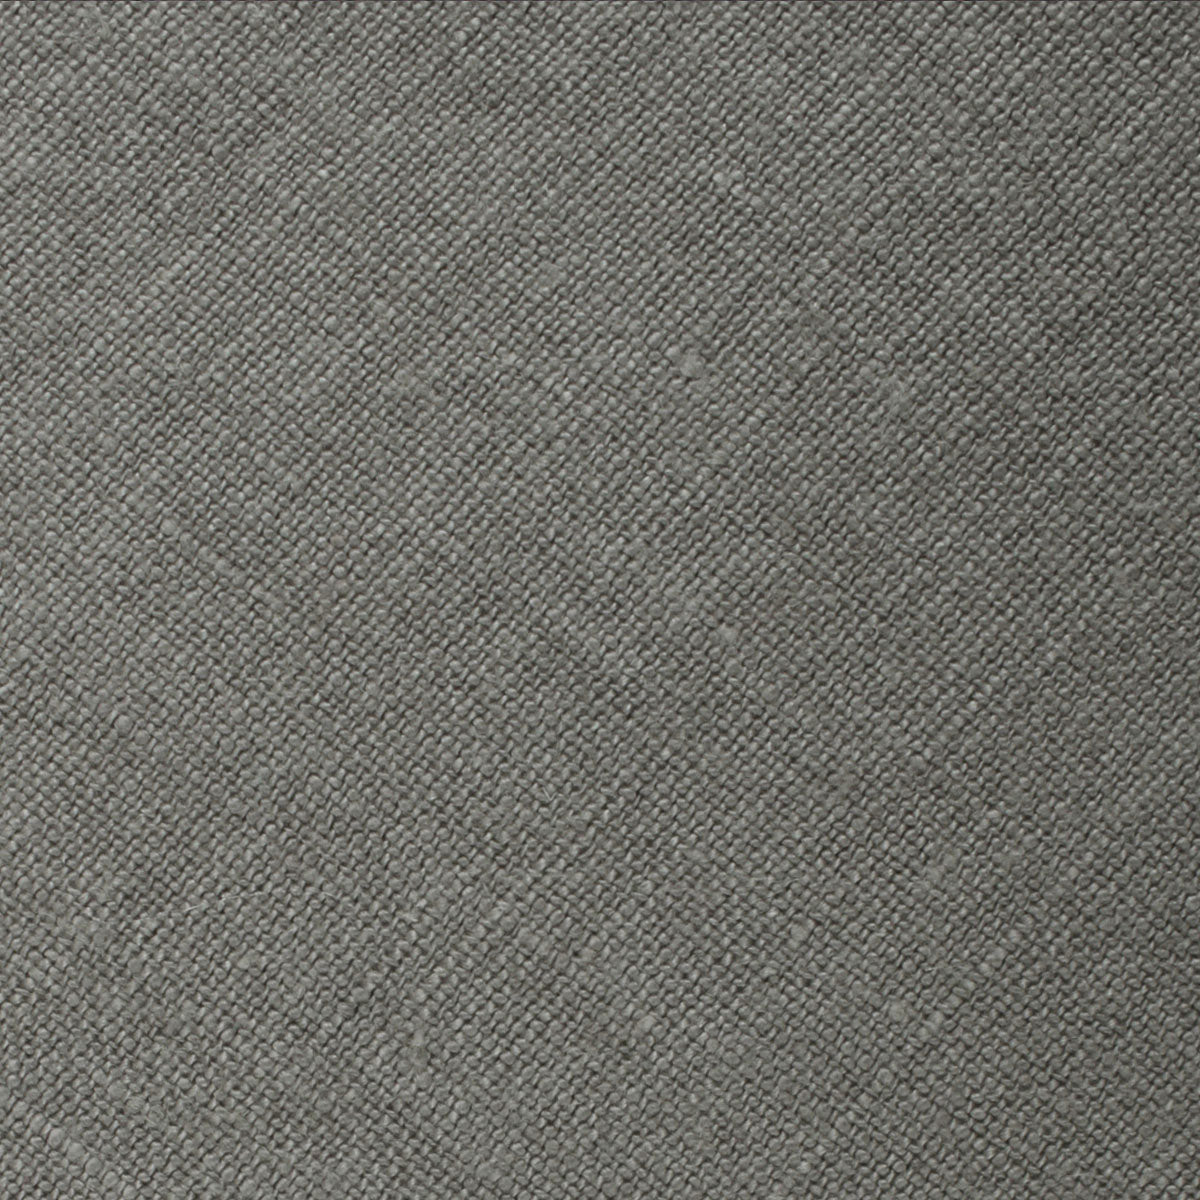 Mercury Charcoal Linen Pocket Square Fabric